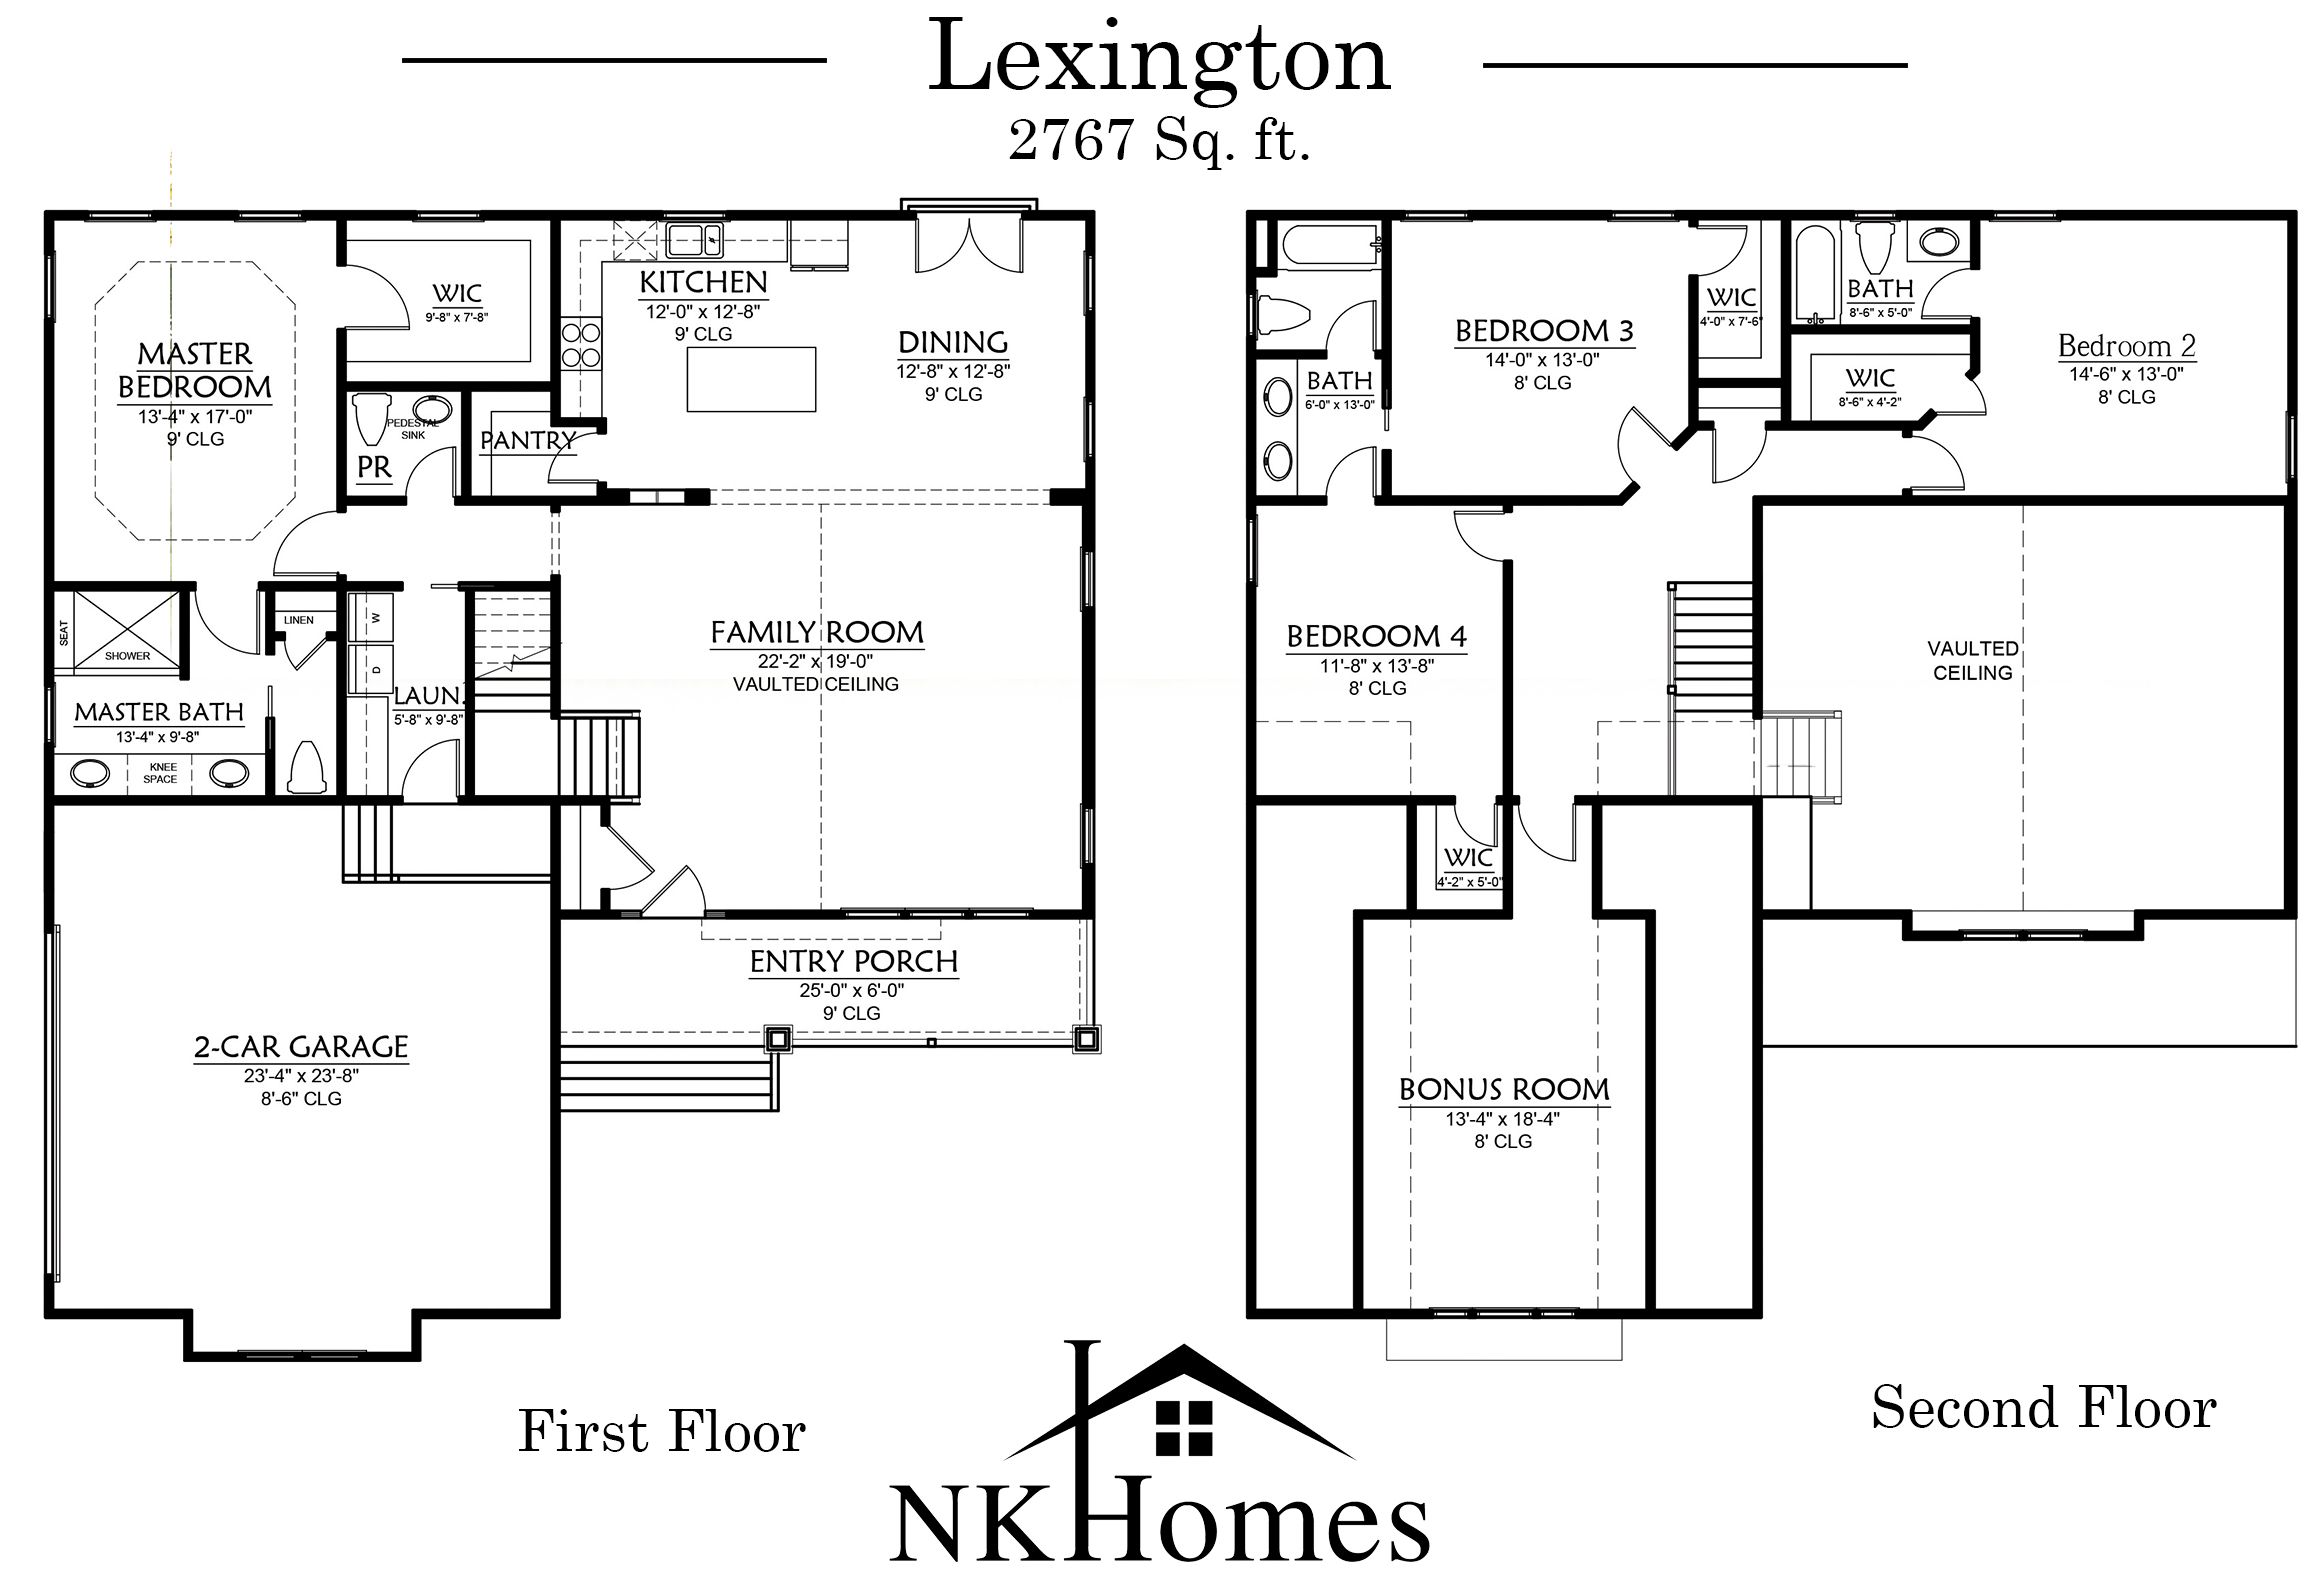 Lexington Floor Plan - NK Homes